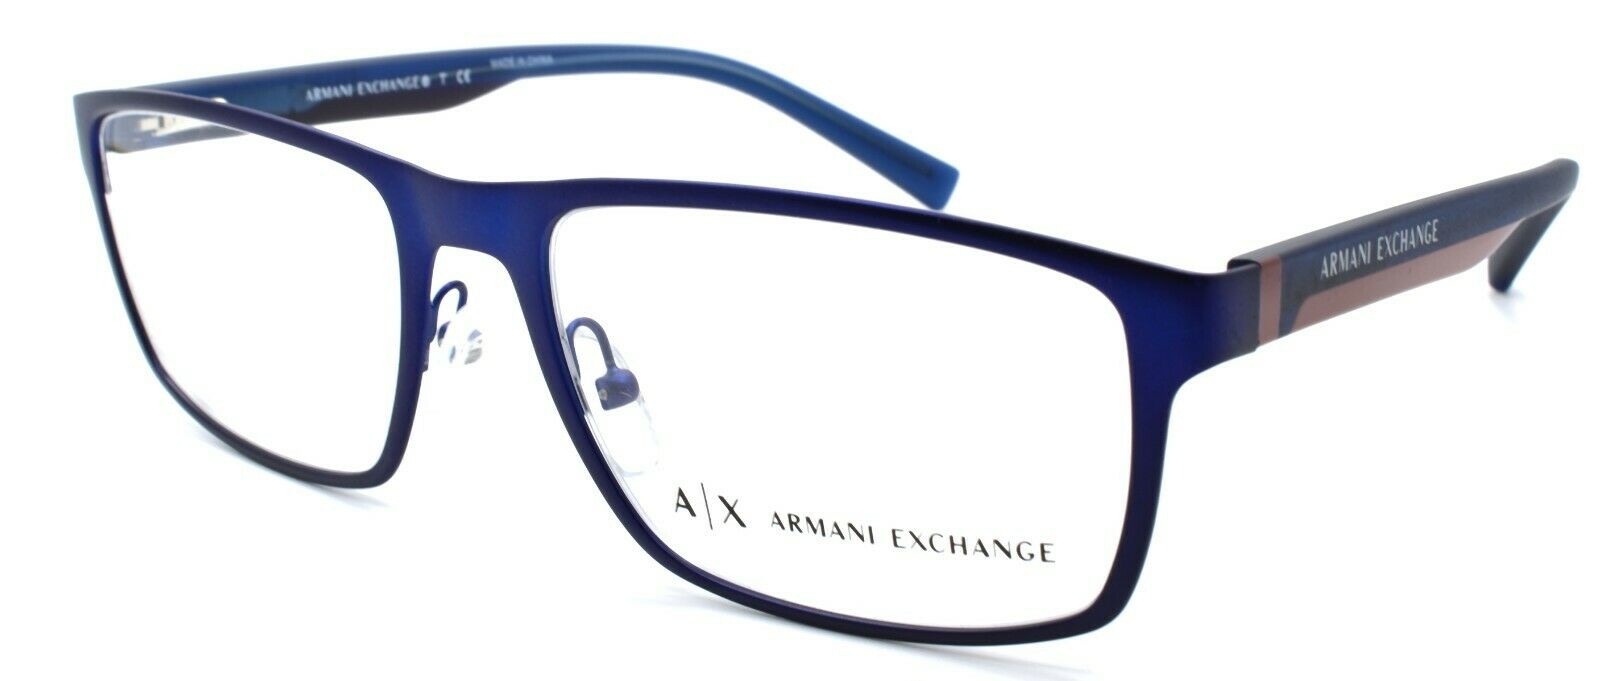 1-Armani Exchange AX1024 6099 Men's Eyeglasses Frames 54-18-140 Matte Blue-8053672749458-IKSpecs